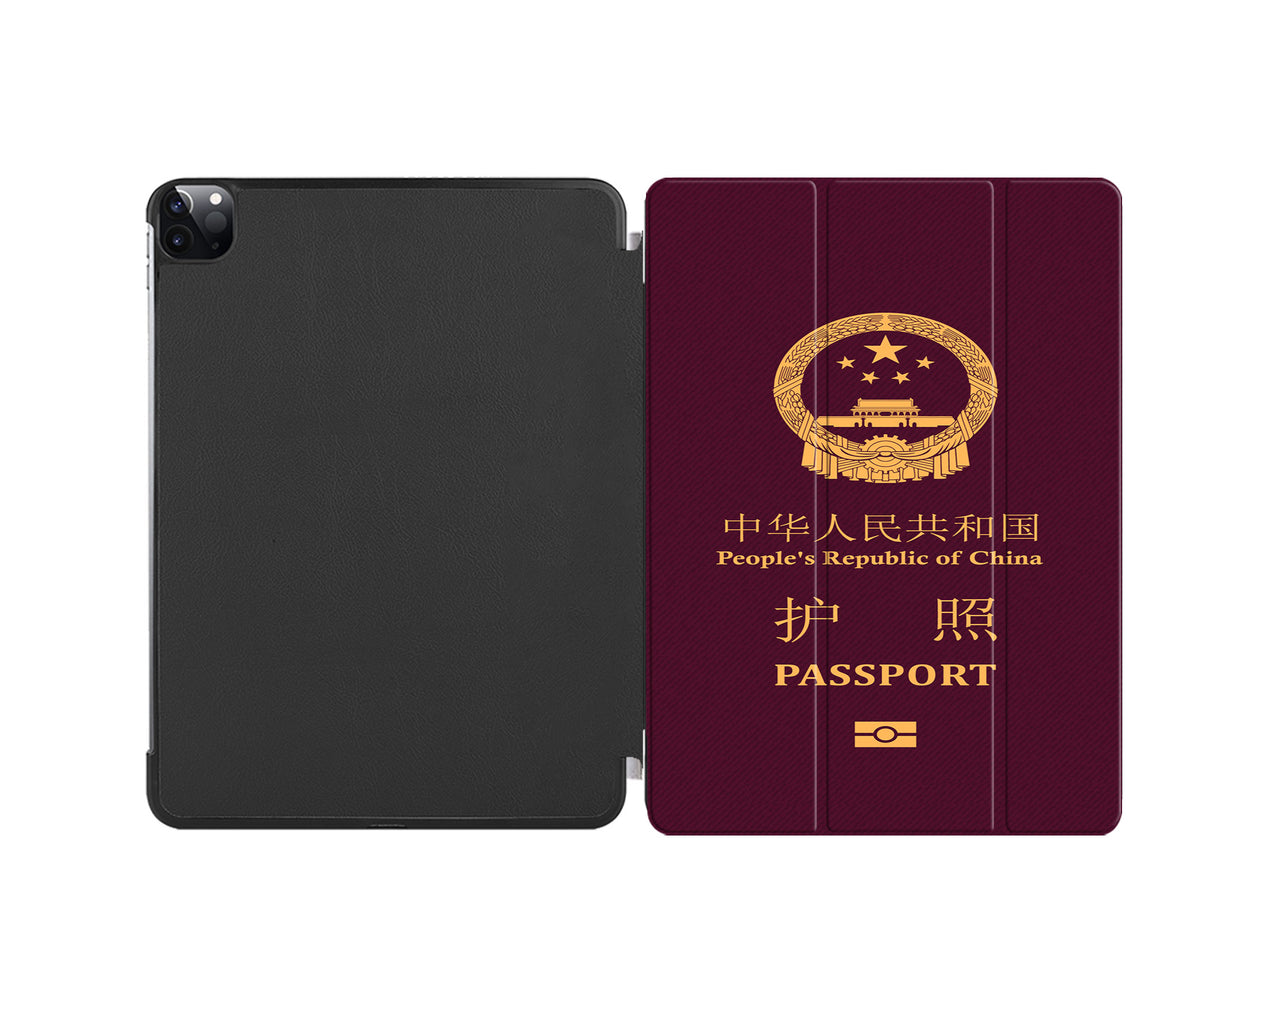 China Passport Designed iPad Cases